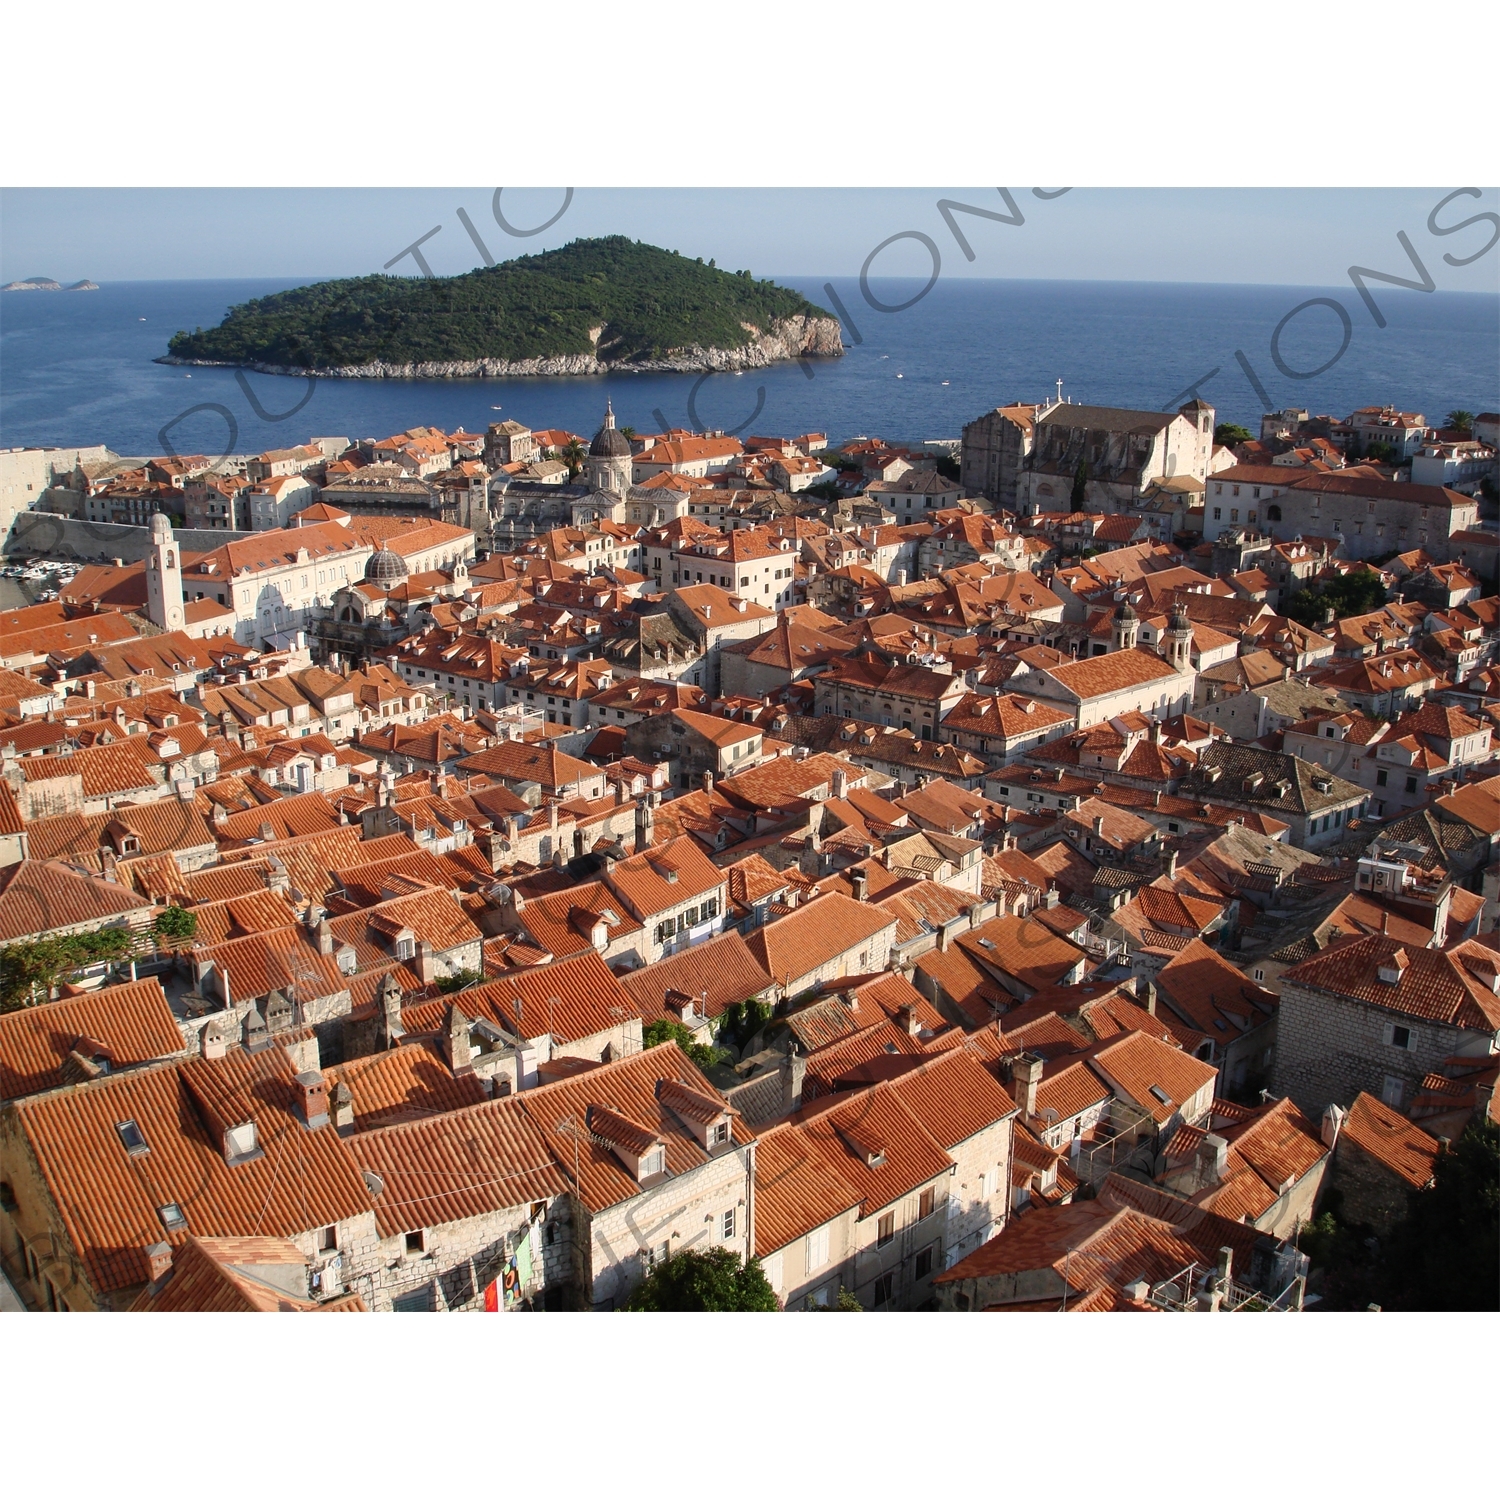 Otok Lokrum in Dubrovnik